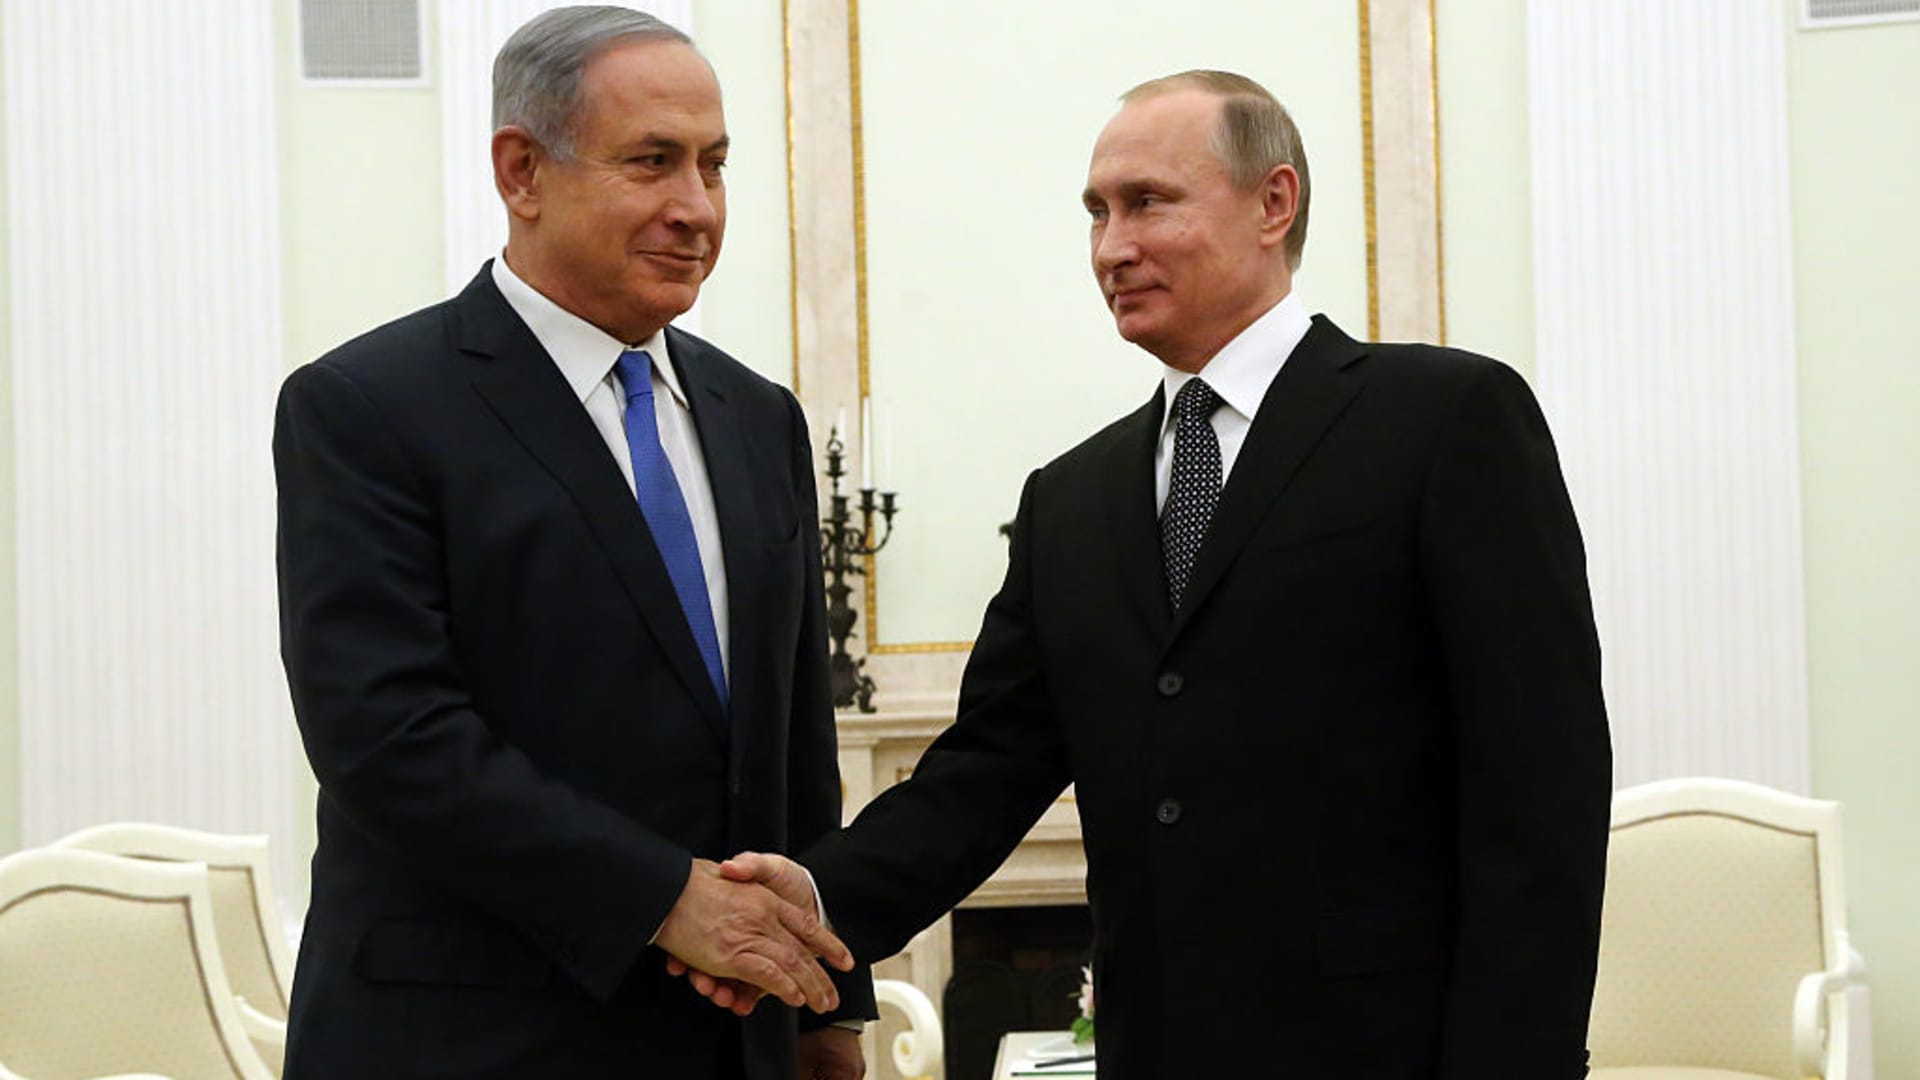 Russian President Vladimir Putin and Israeli Prime Minister Benjamin Netanyahu during their meeting at the Kremlin on April 21, 2016.